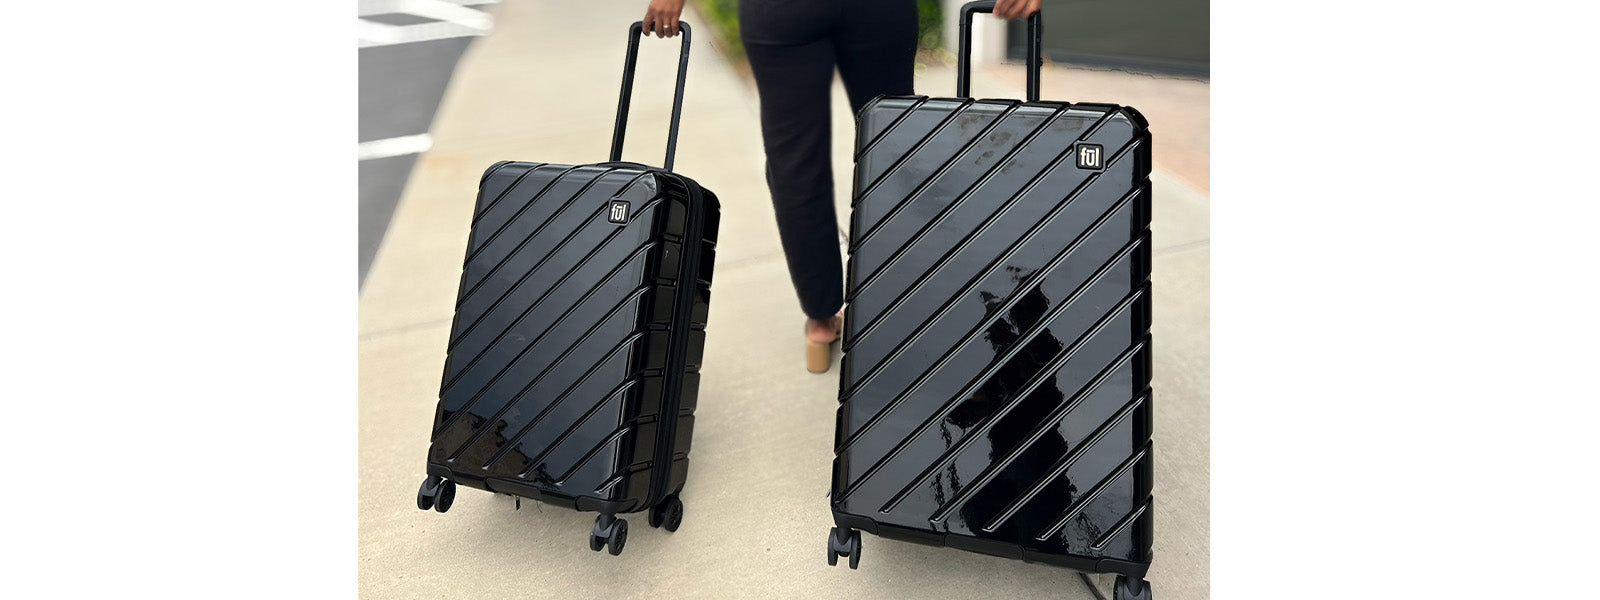 Ful Velocity Black Hardside Spinner Suitcase